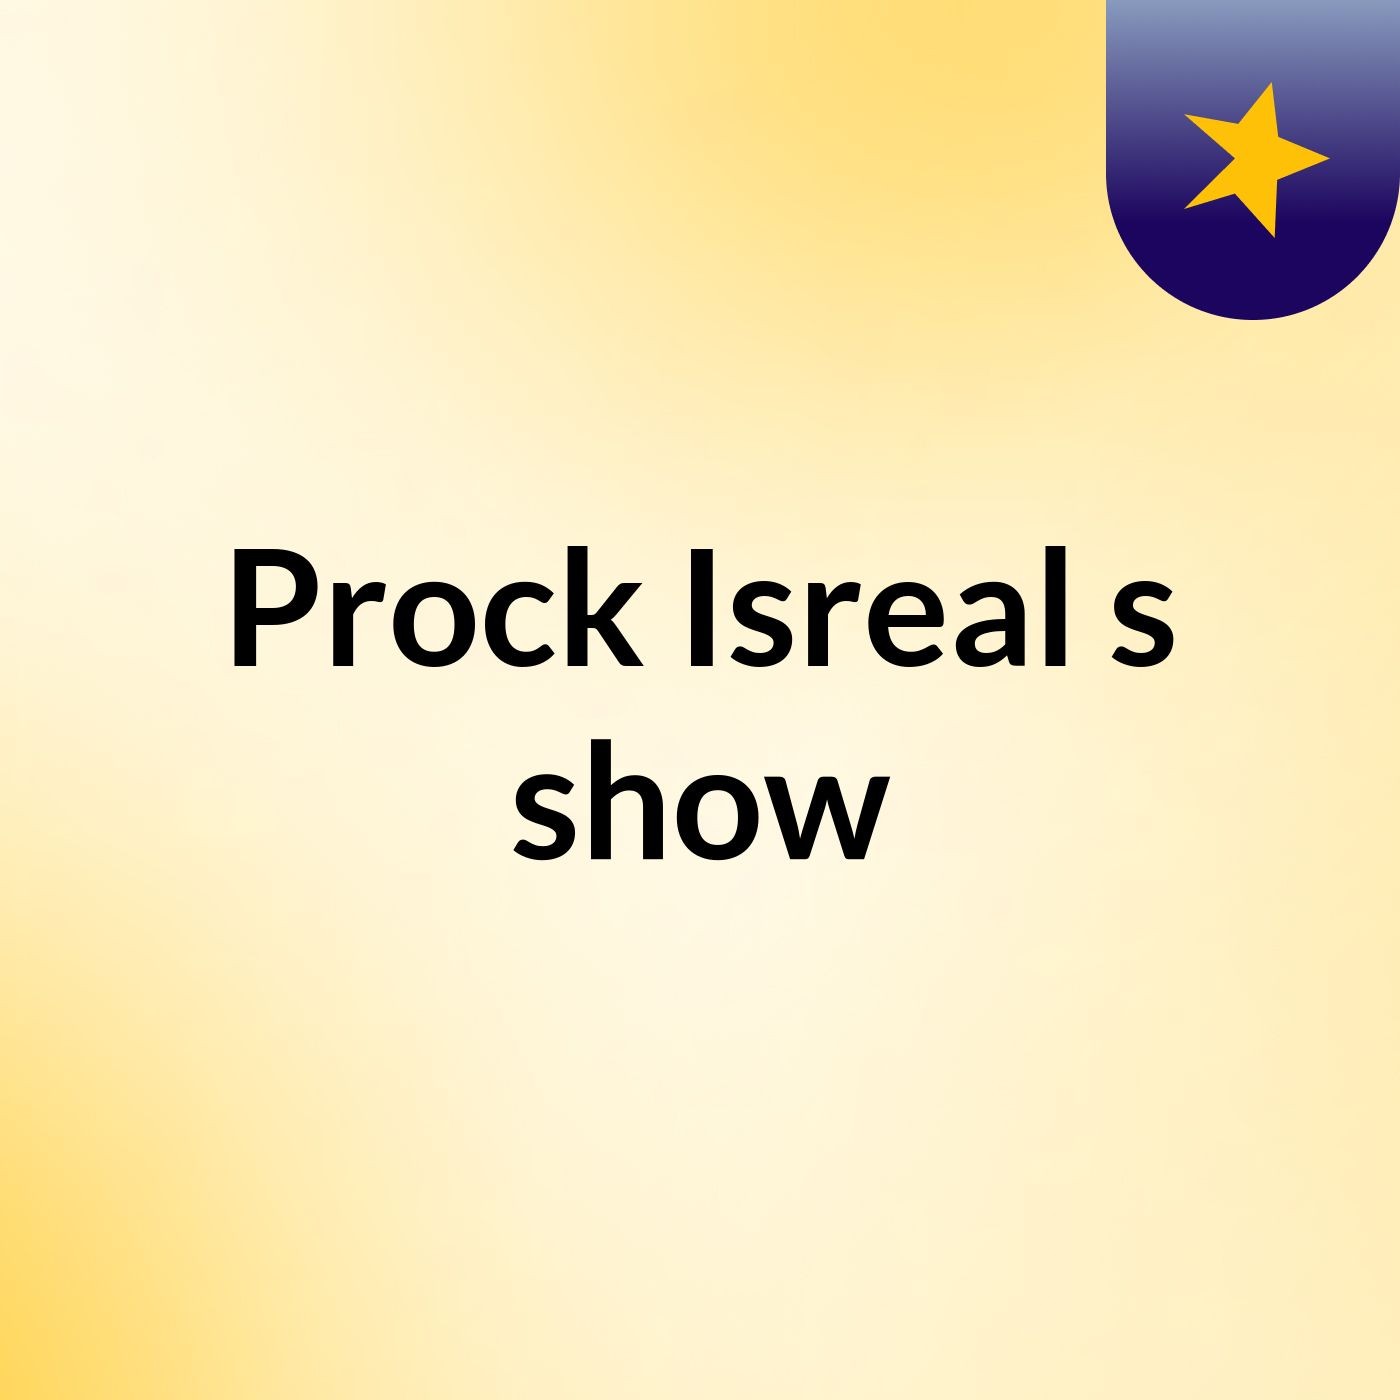 Prock Isreal's show